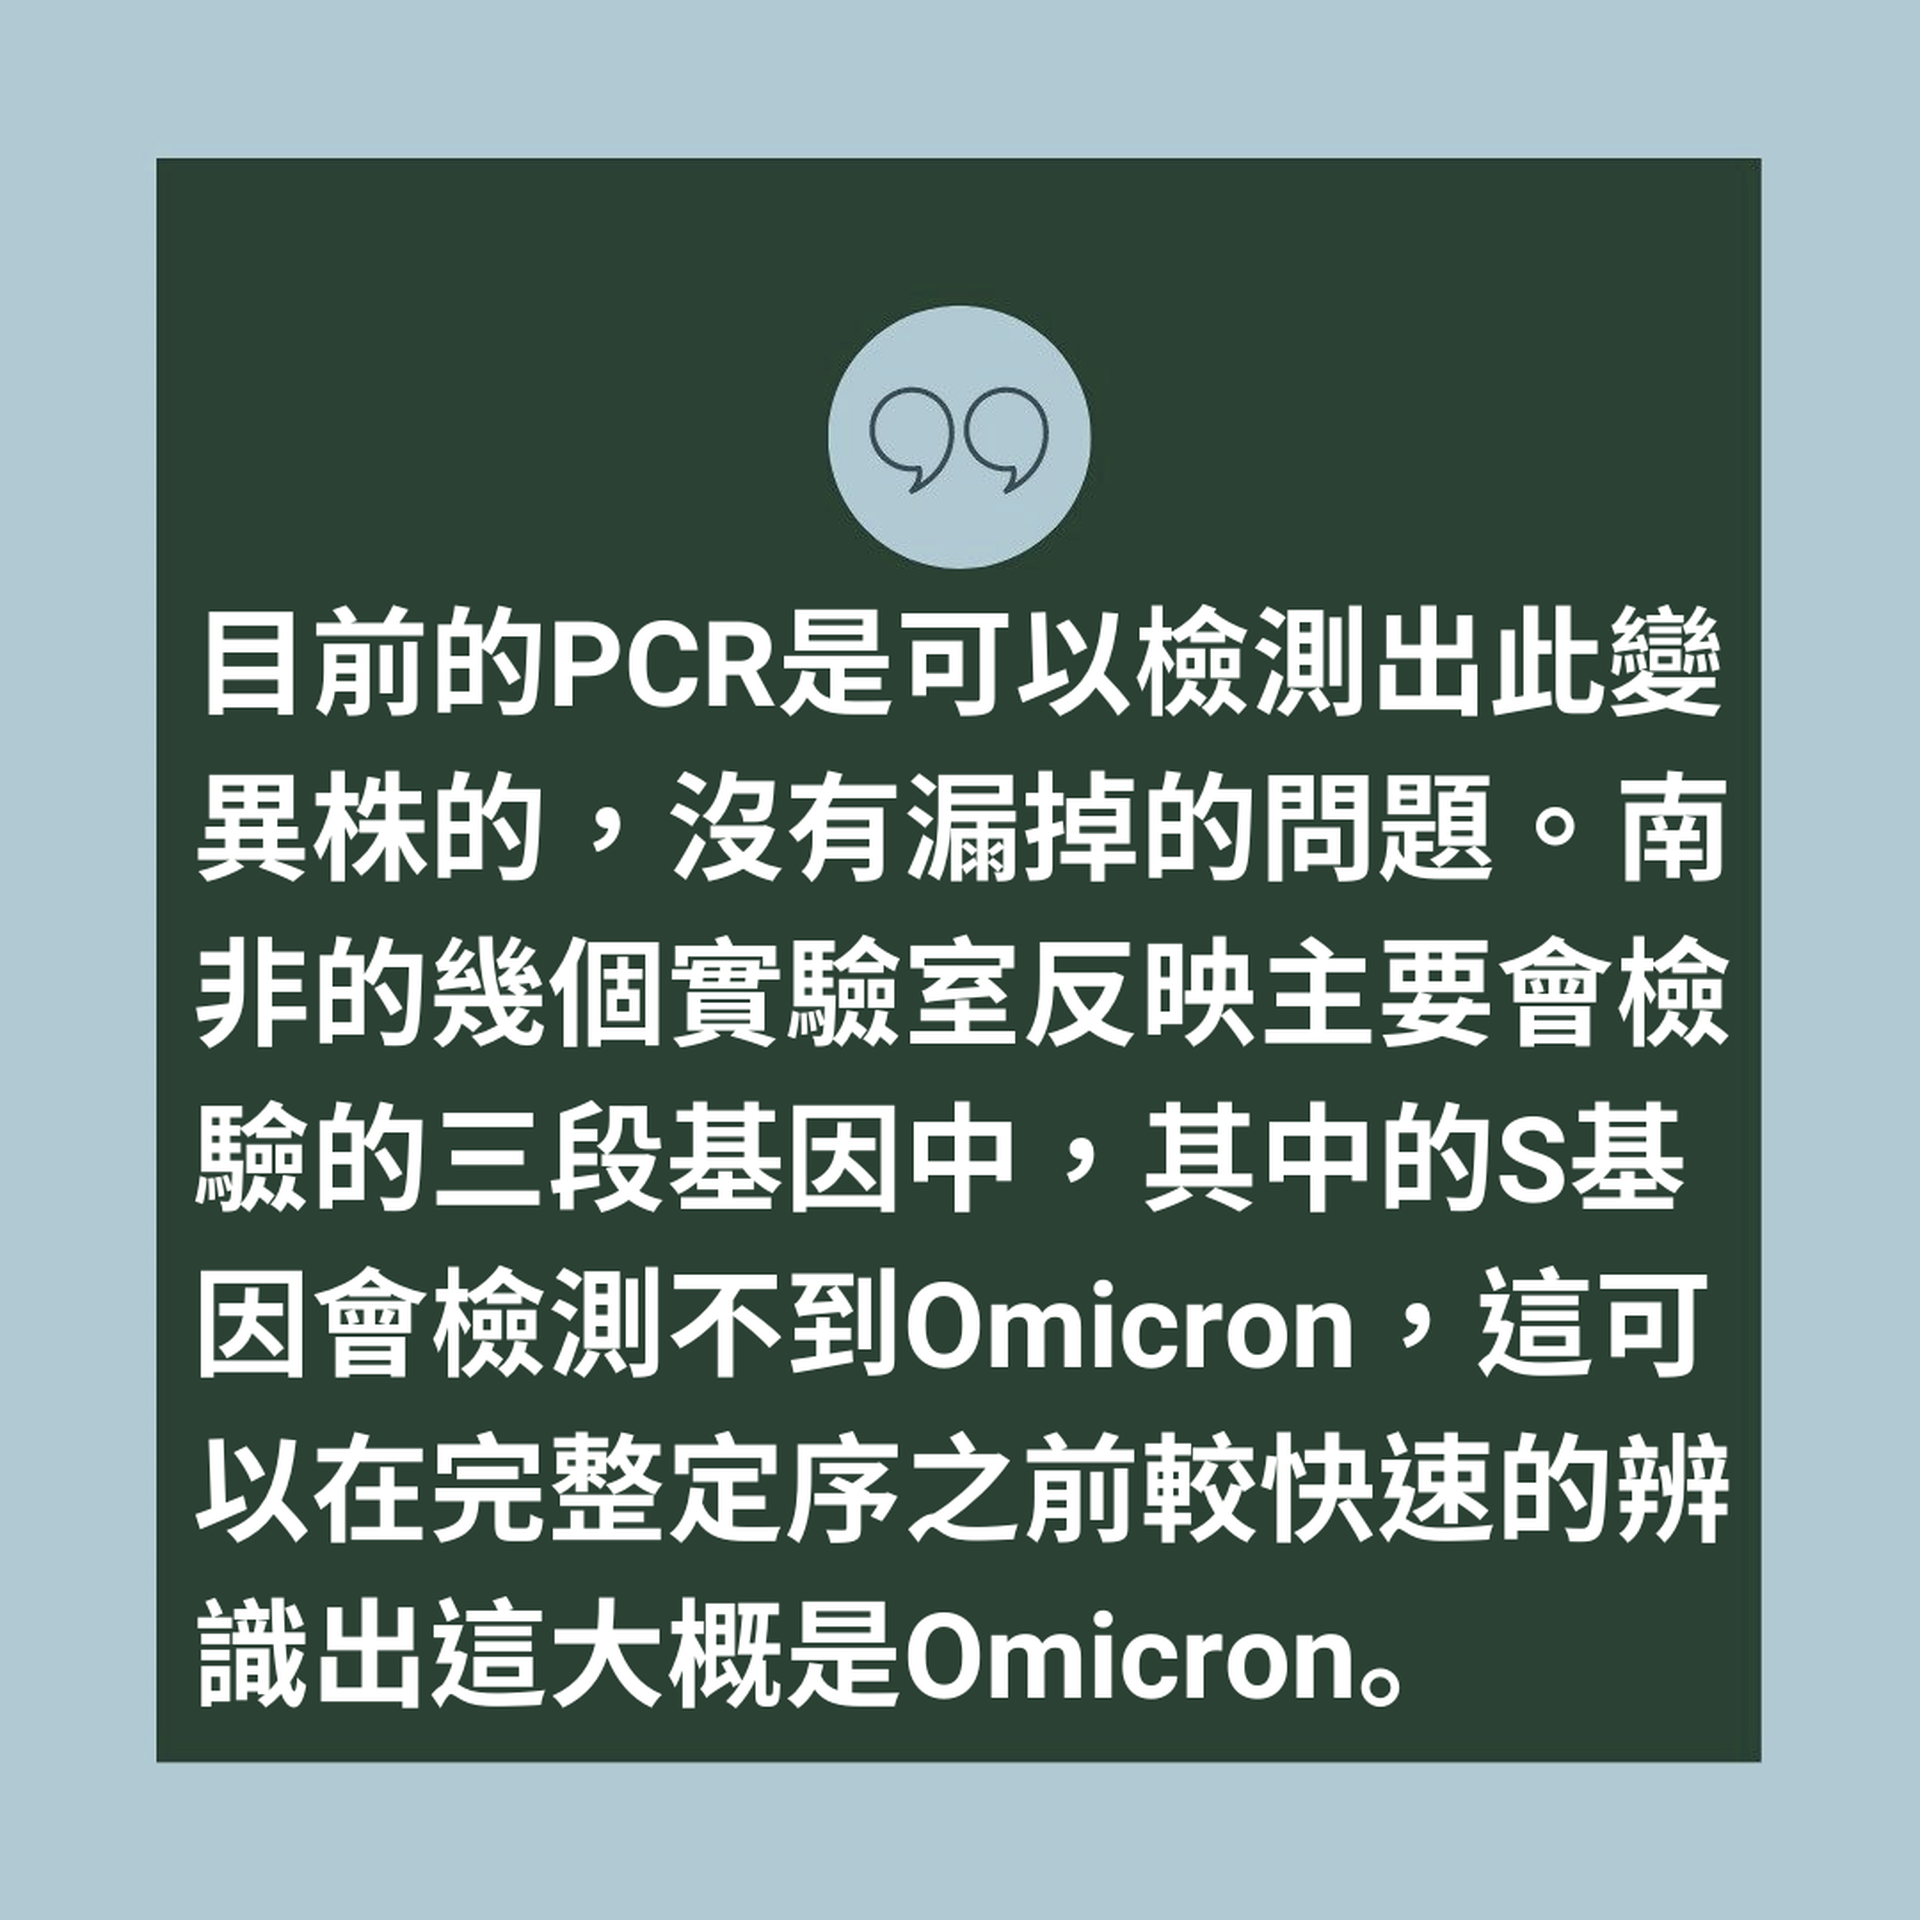 Omicron 6大Q&A懒人包（01制图）